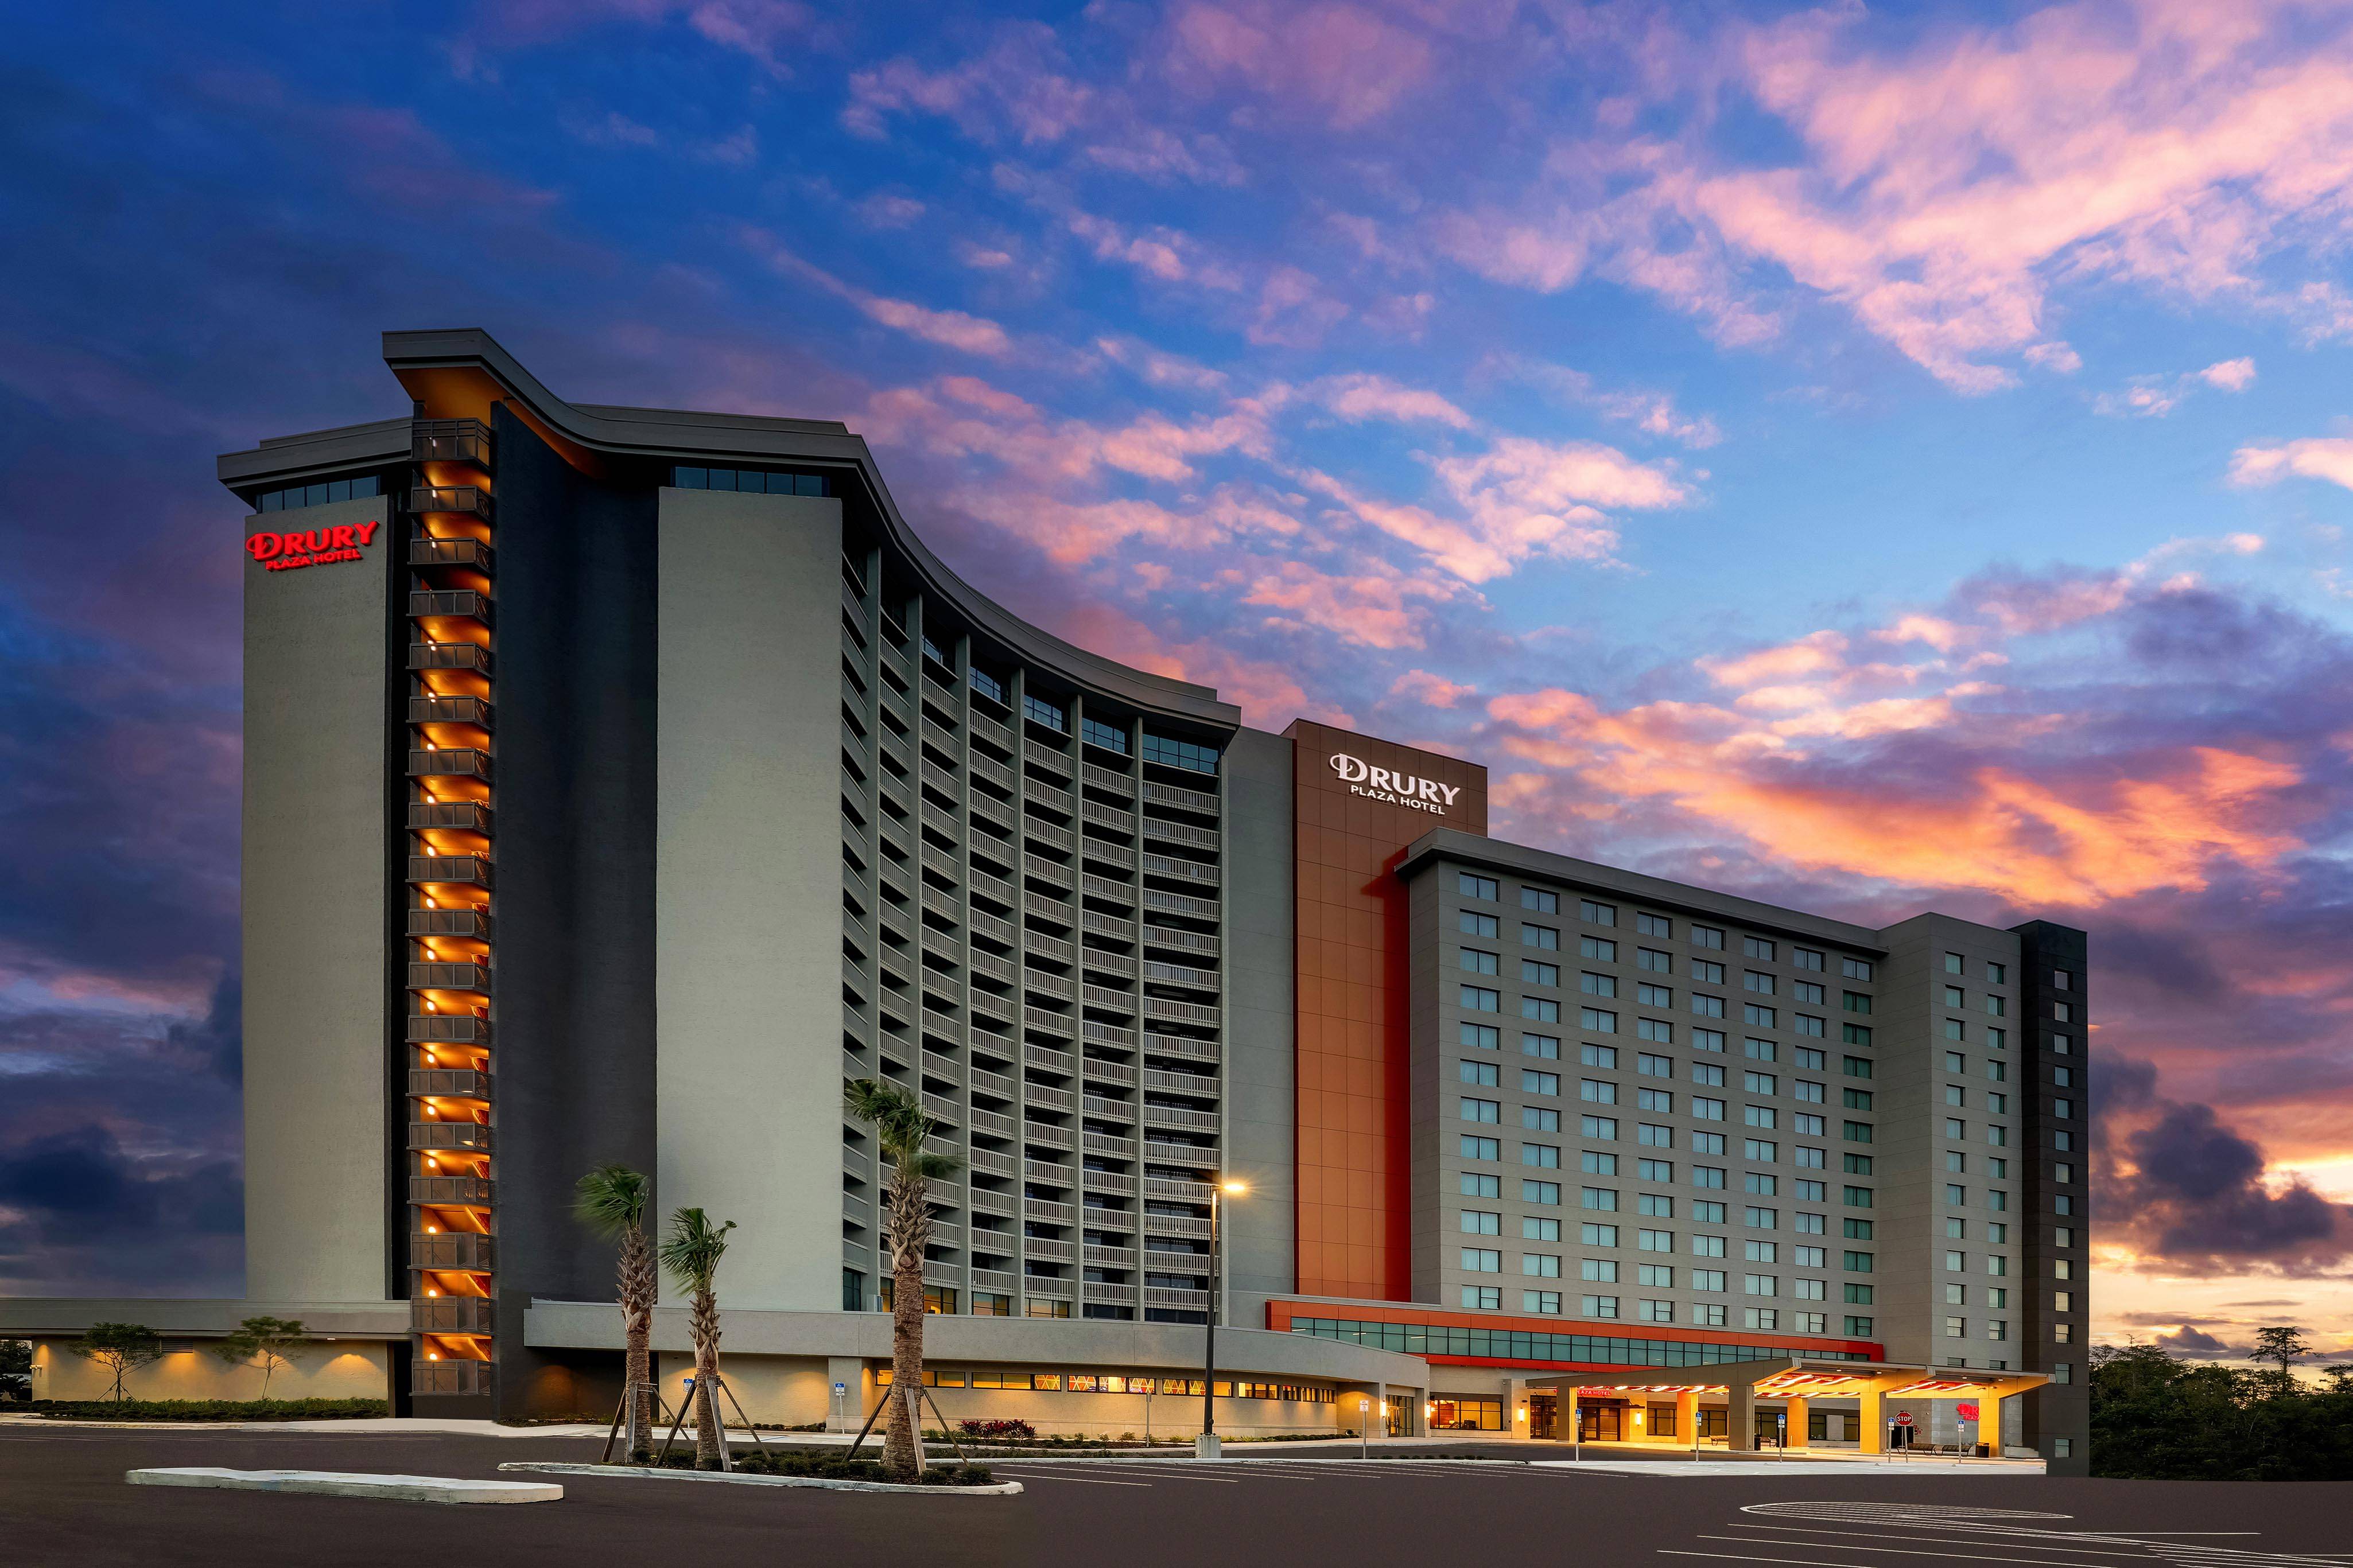 Drury Plaza Hotel Orlando overview